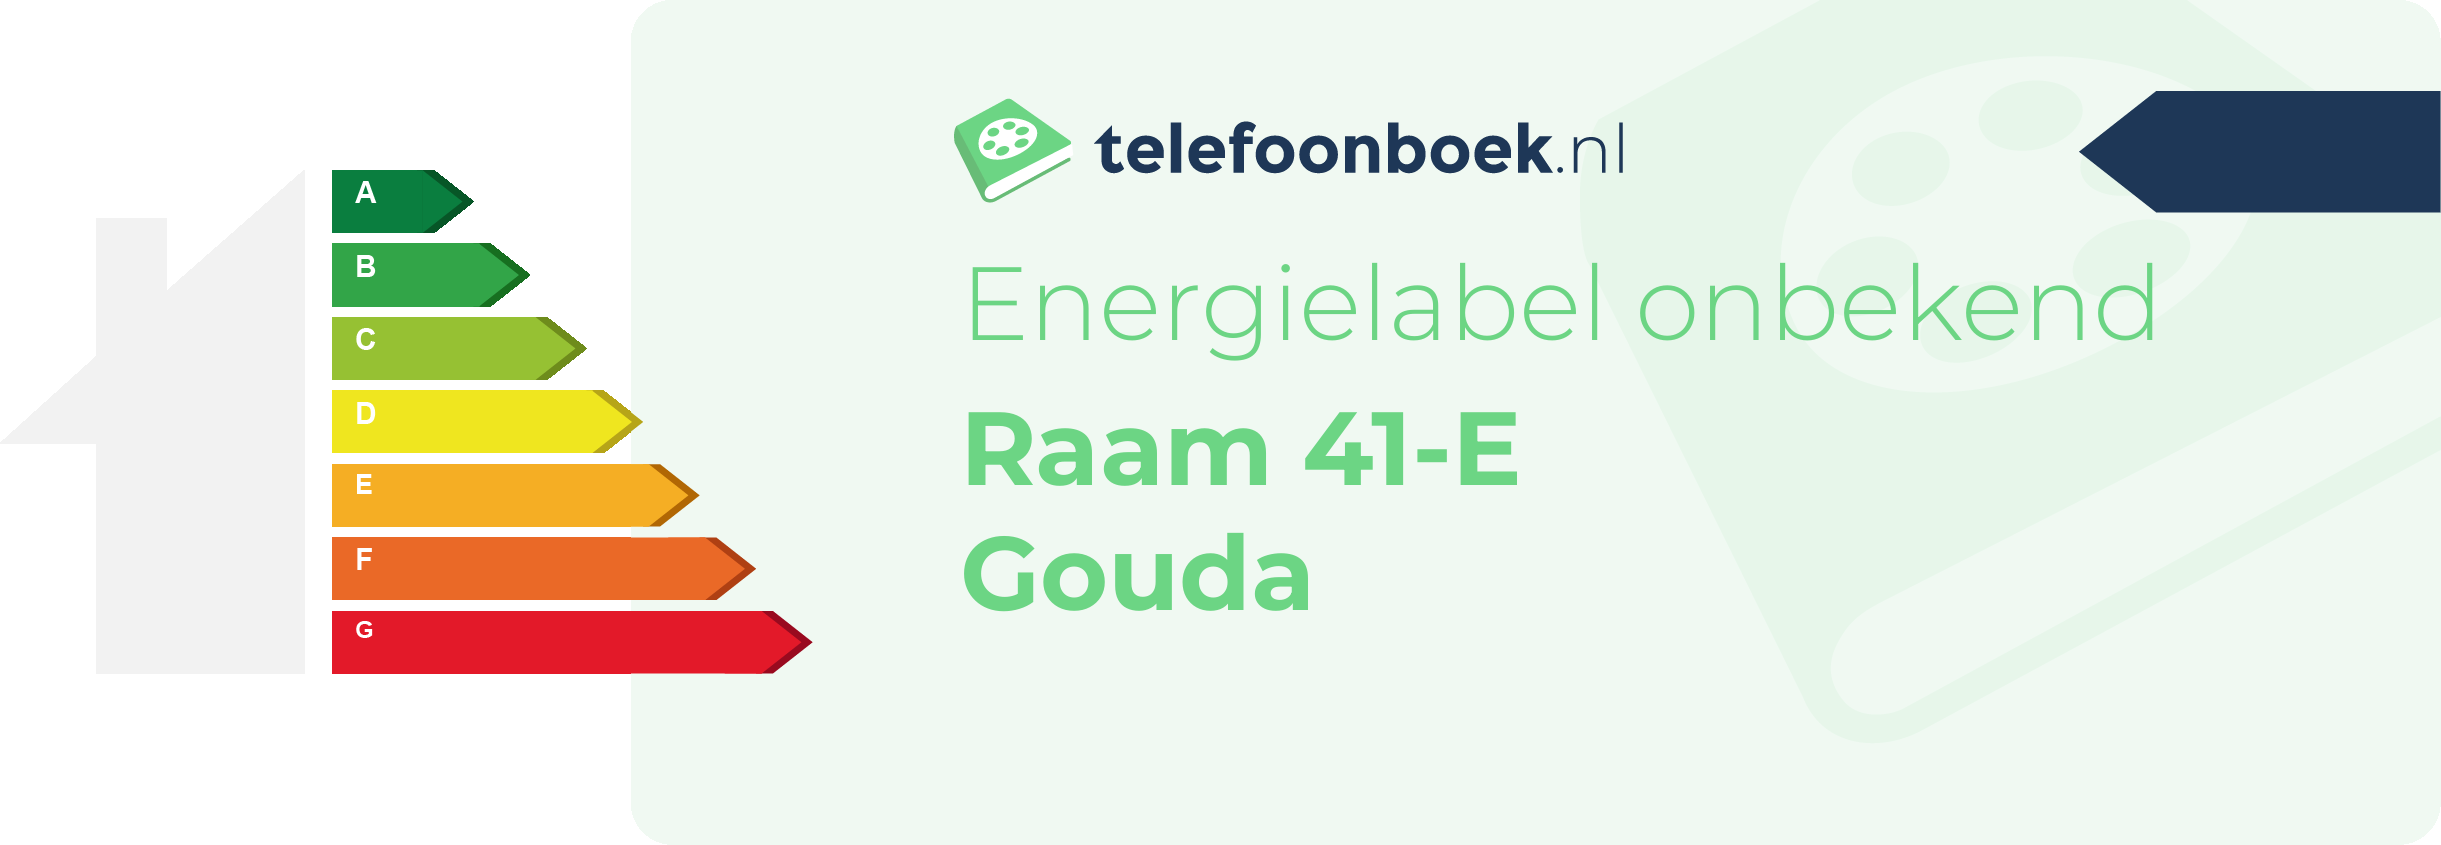 Energielabel Raam 41-E Gouda